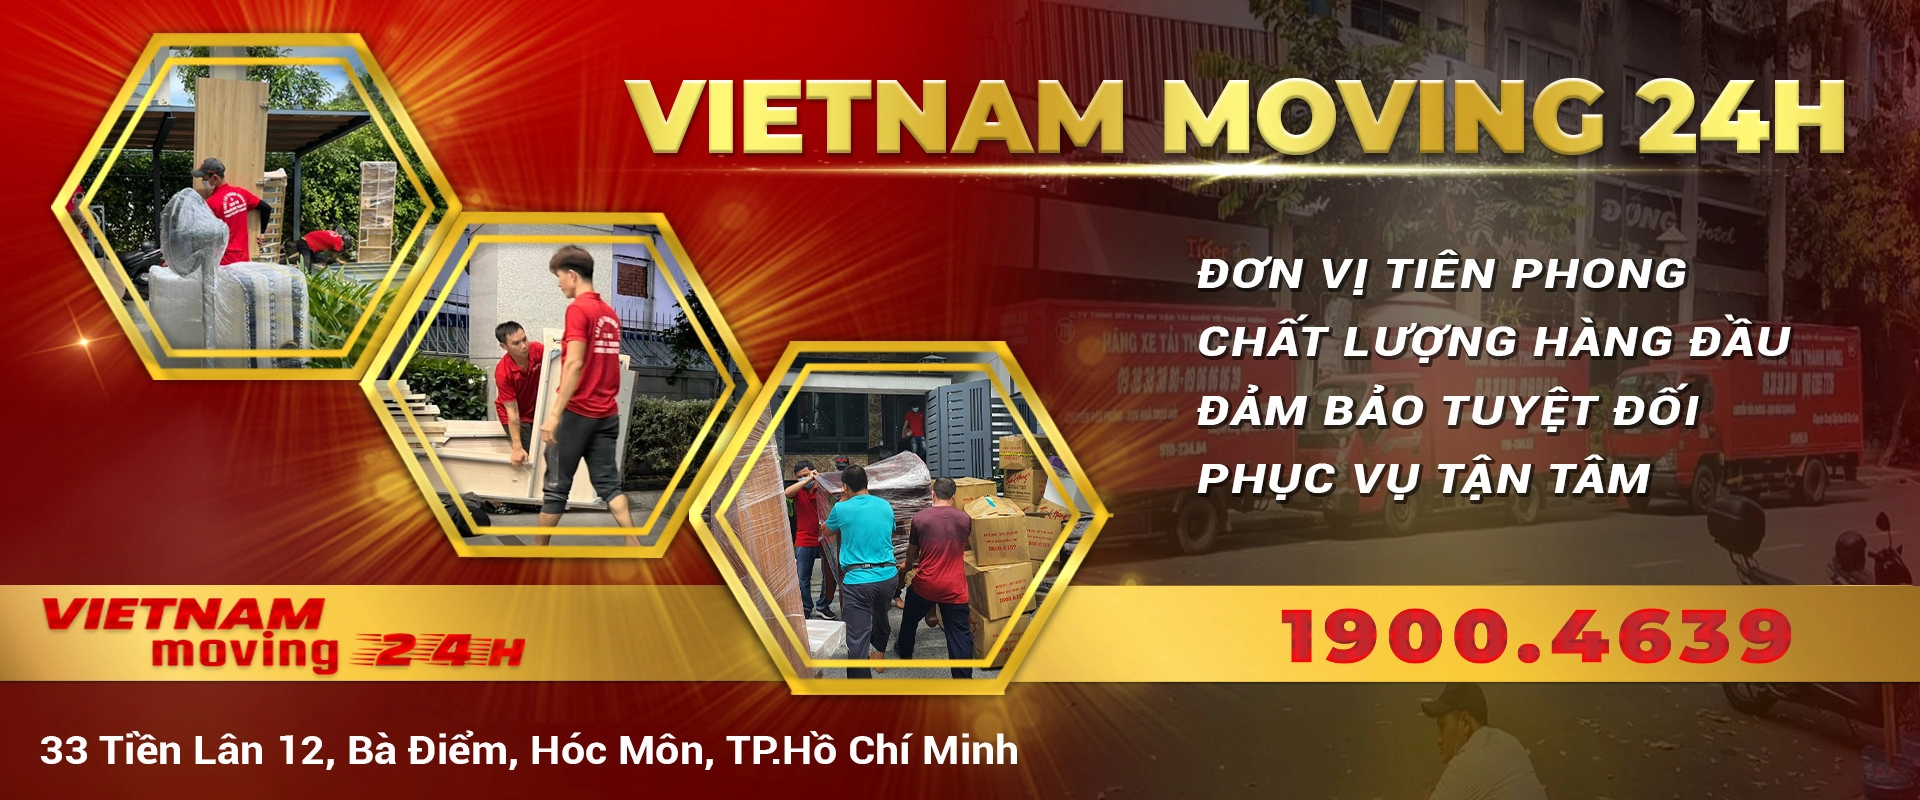 banner dịch vụ vietnammoving24h